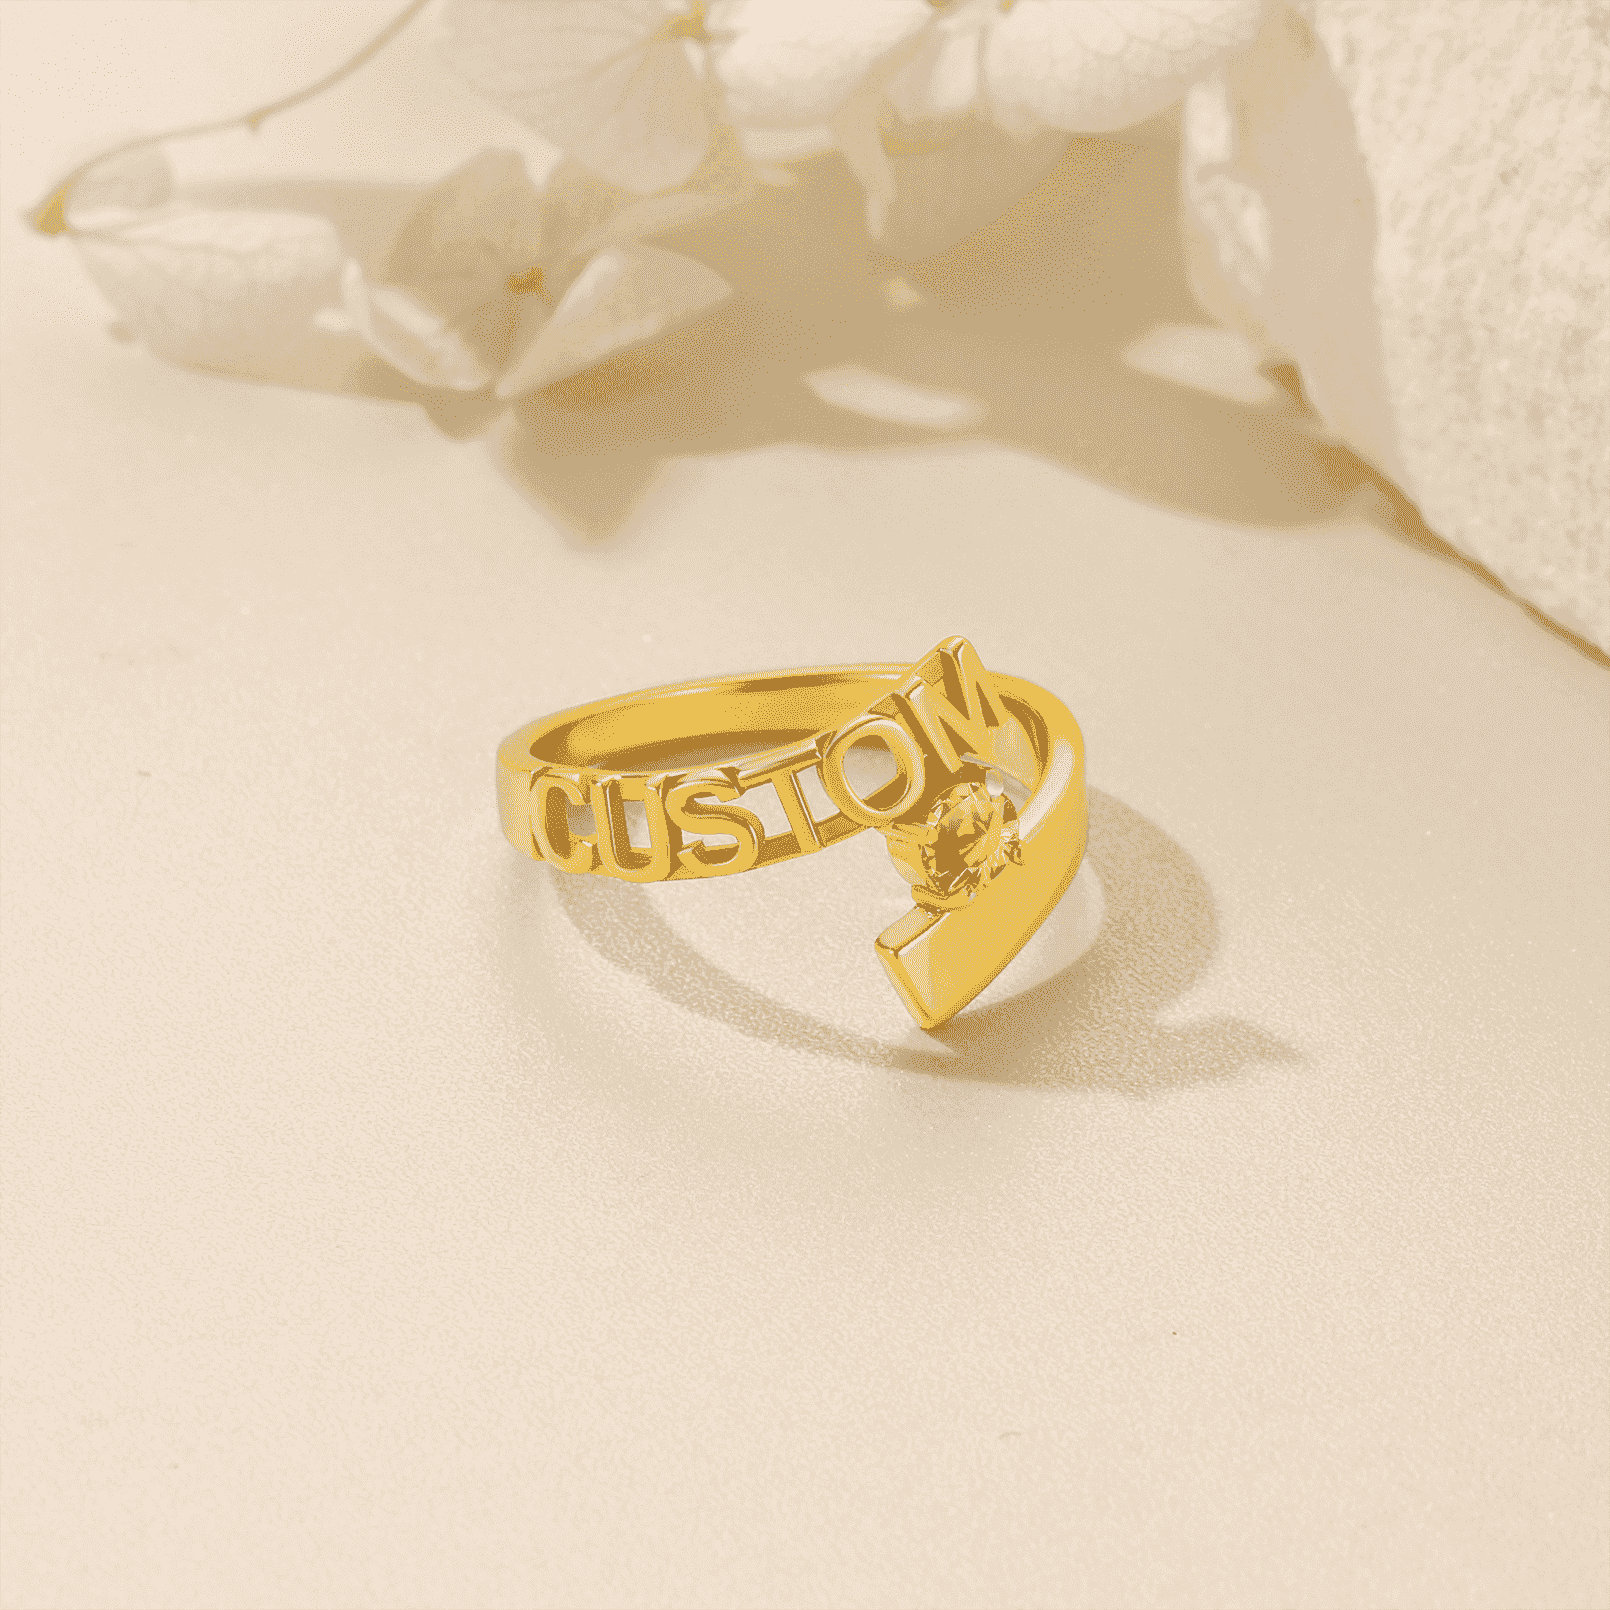 Birthstonesjewelry Personalized Name Birthstone Ring Gold